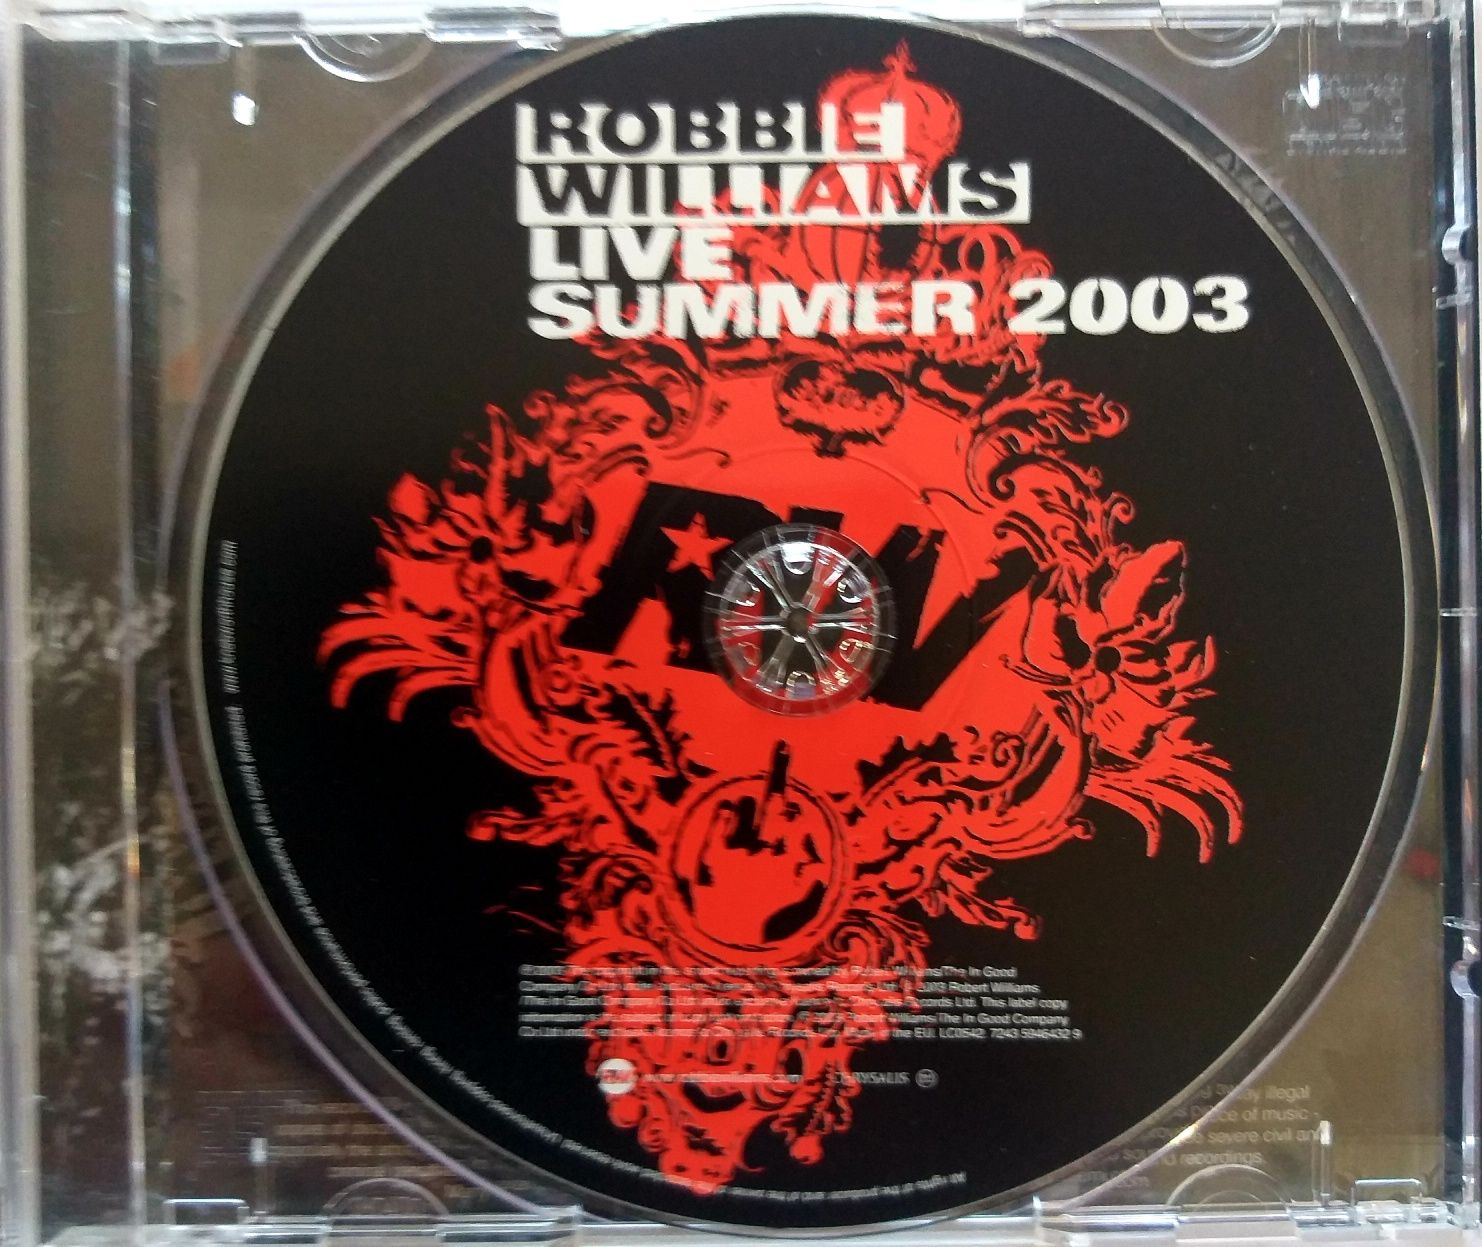 Robbie Williams Live Summer 2003r